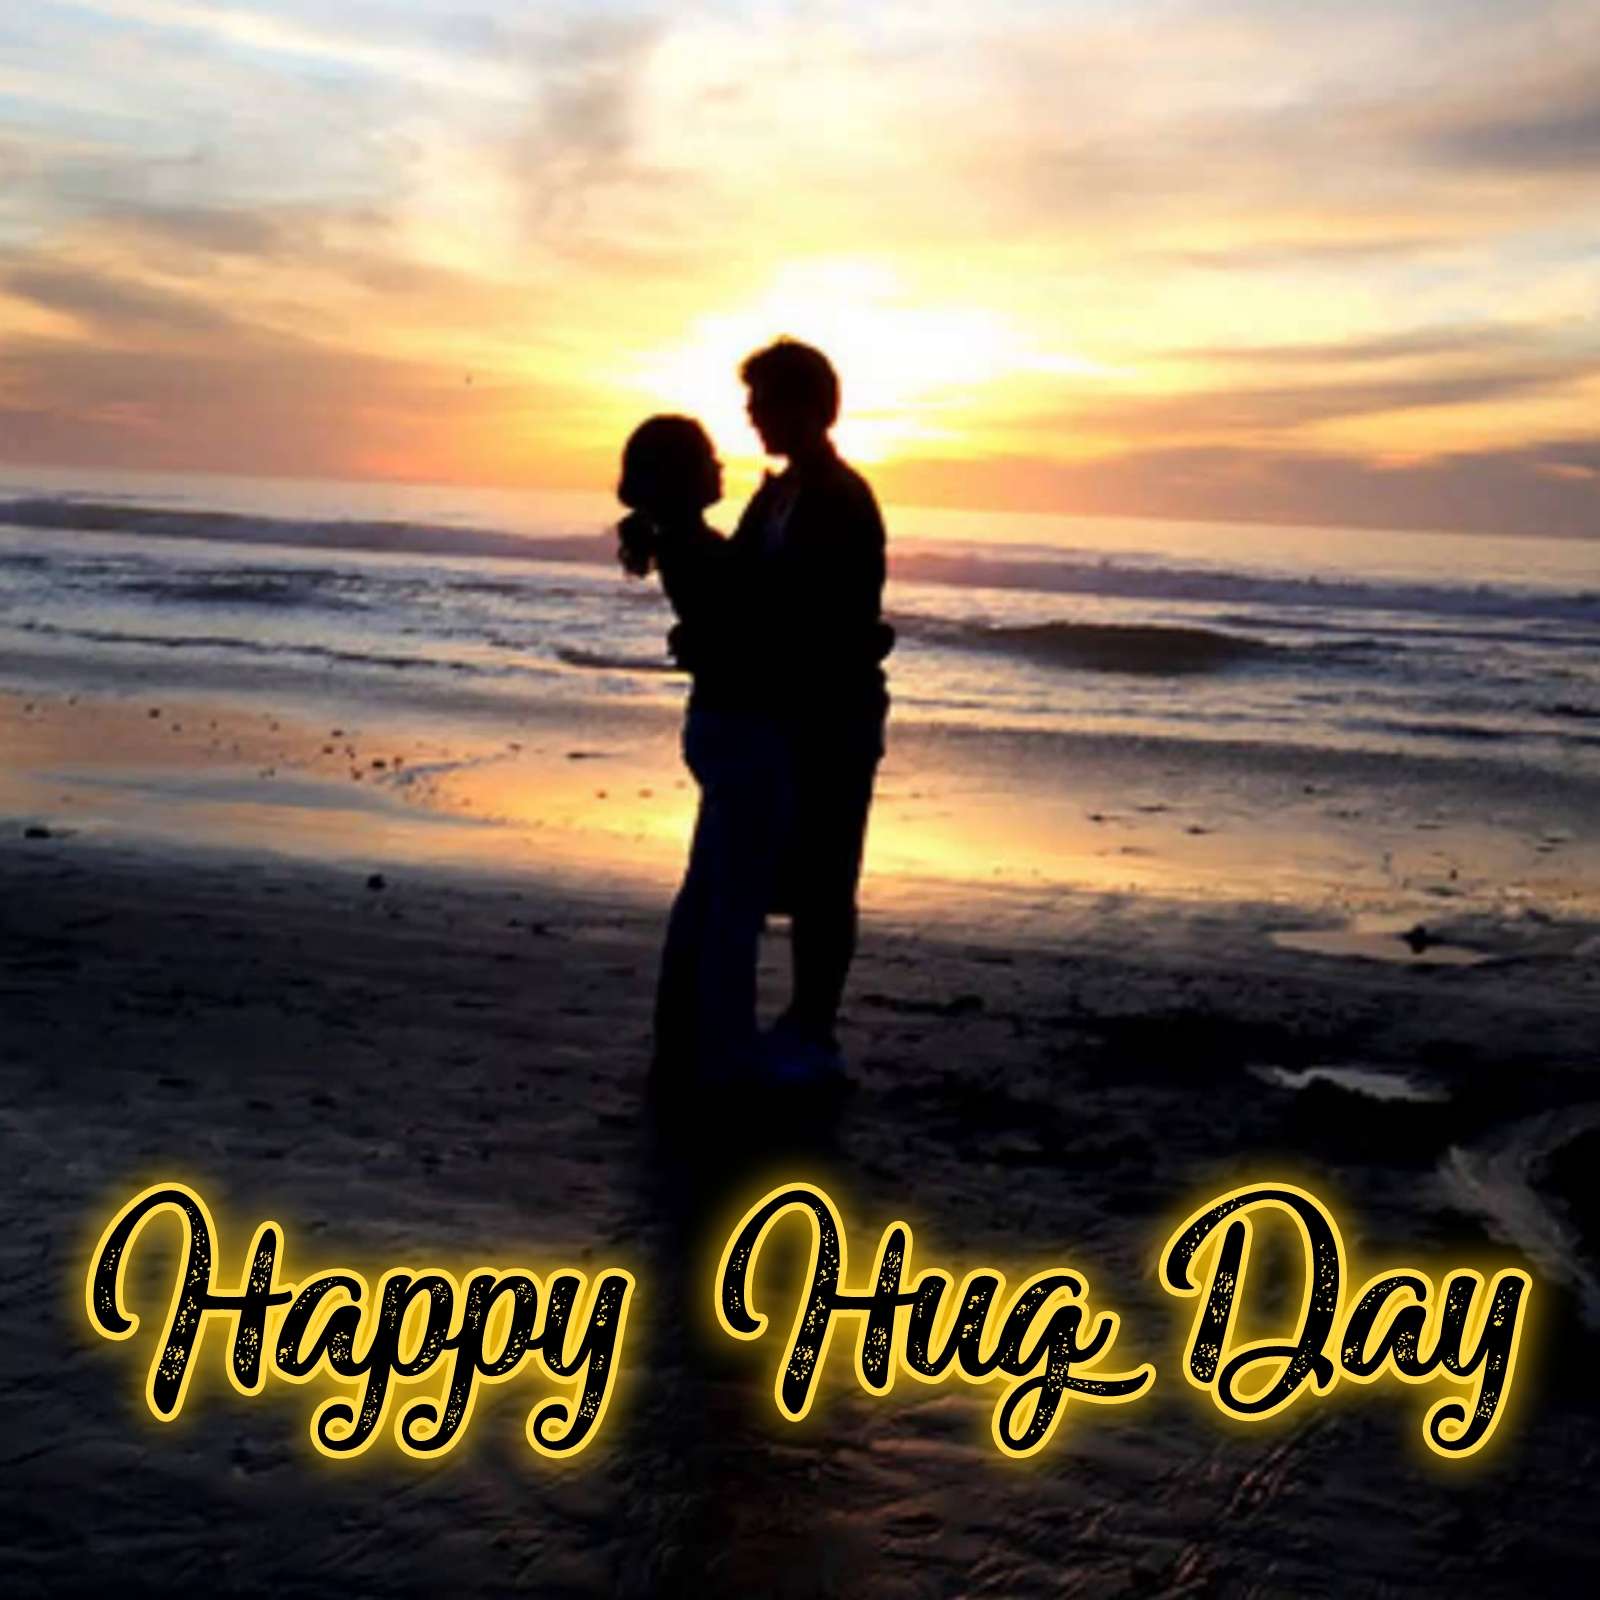 Happy Hug Day Images For Husband Download